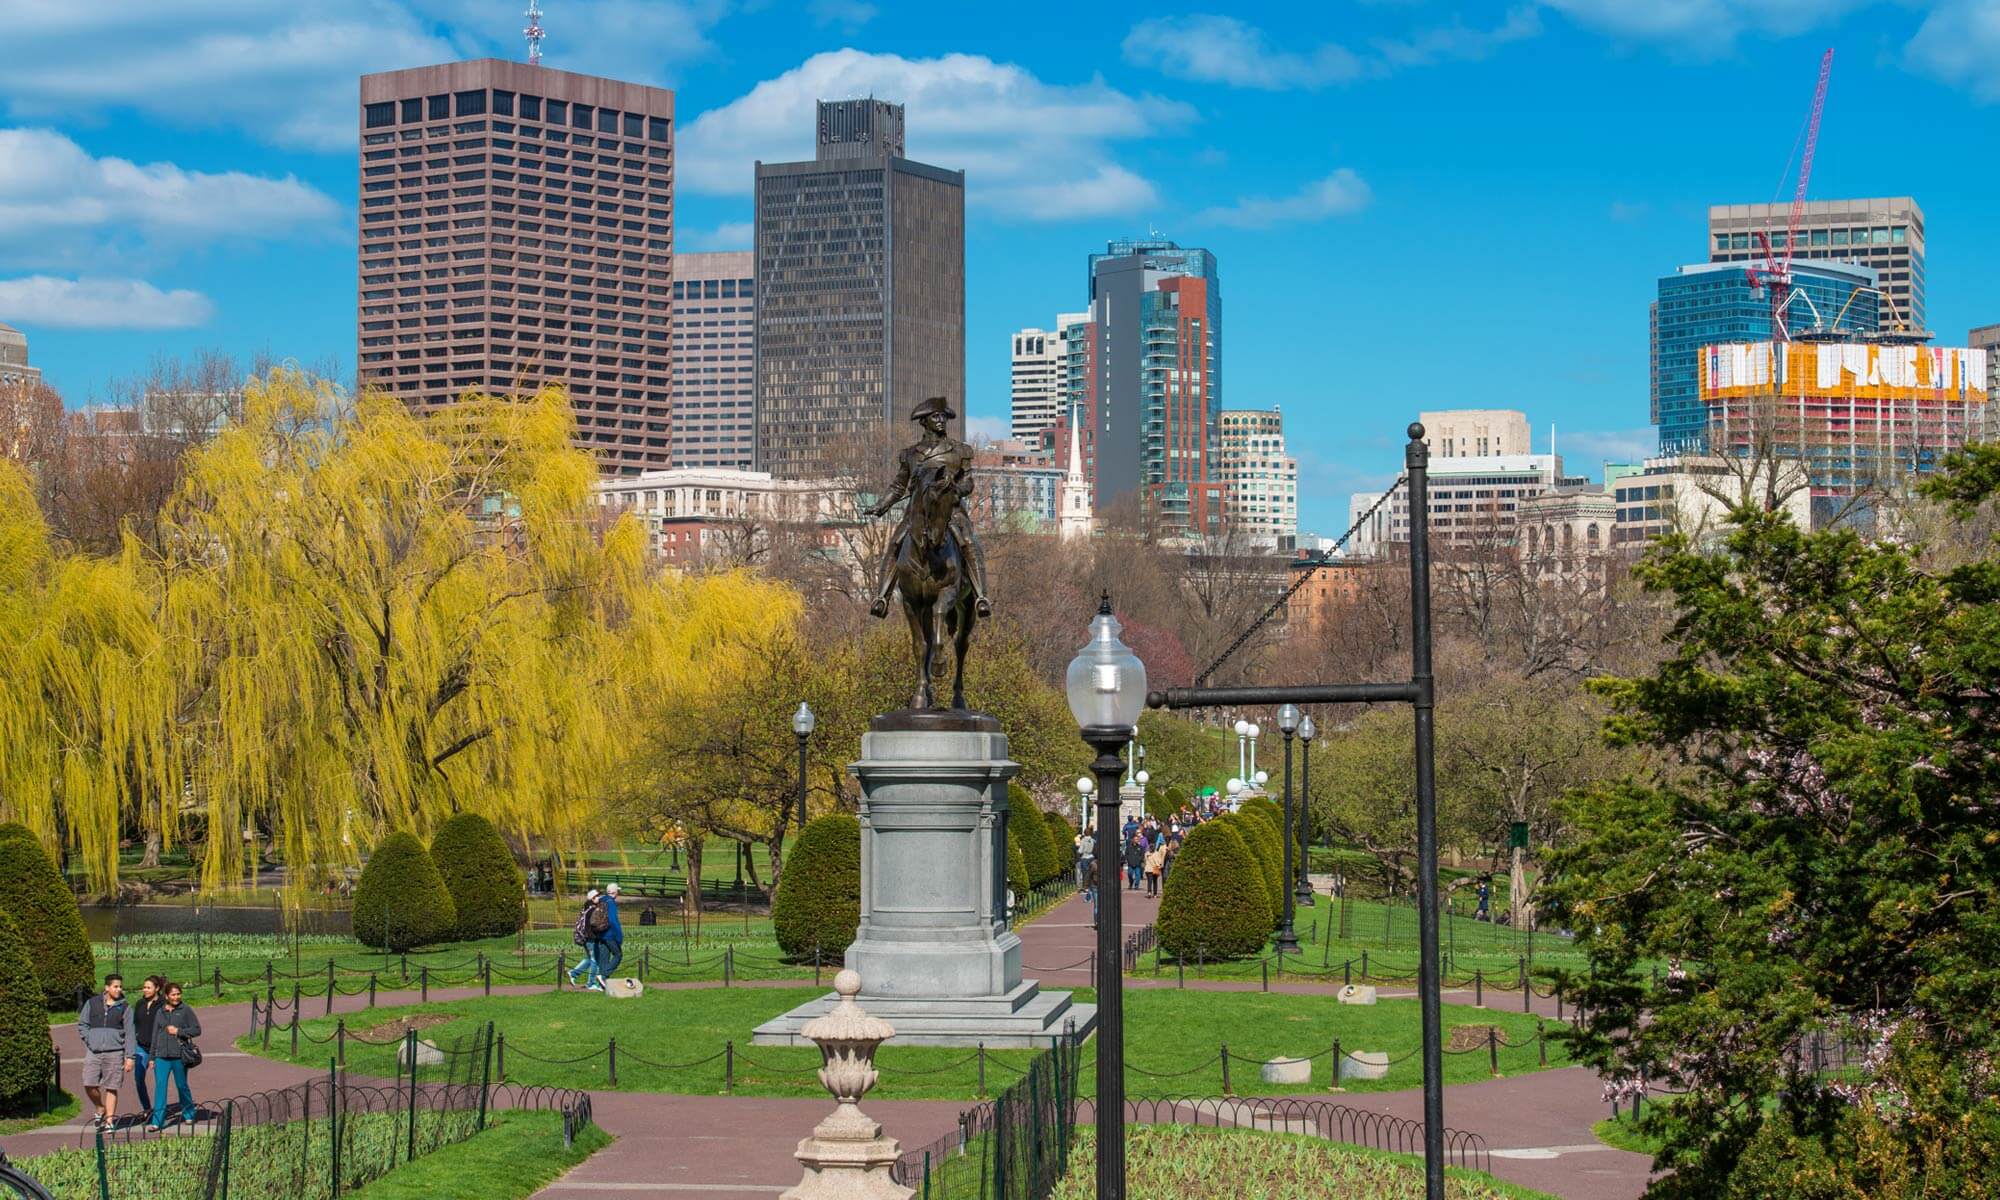 Bronze statue of George Washington on horseback in the Public Garden, Boston, MA